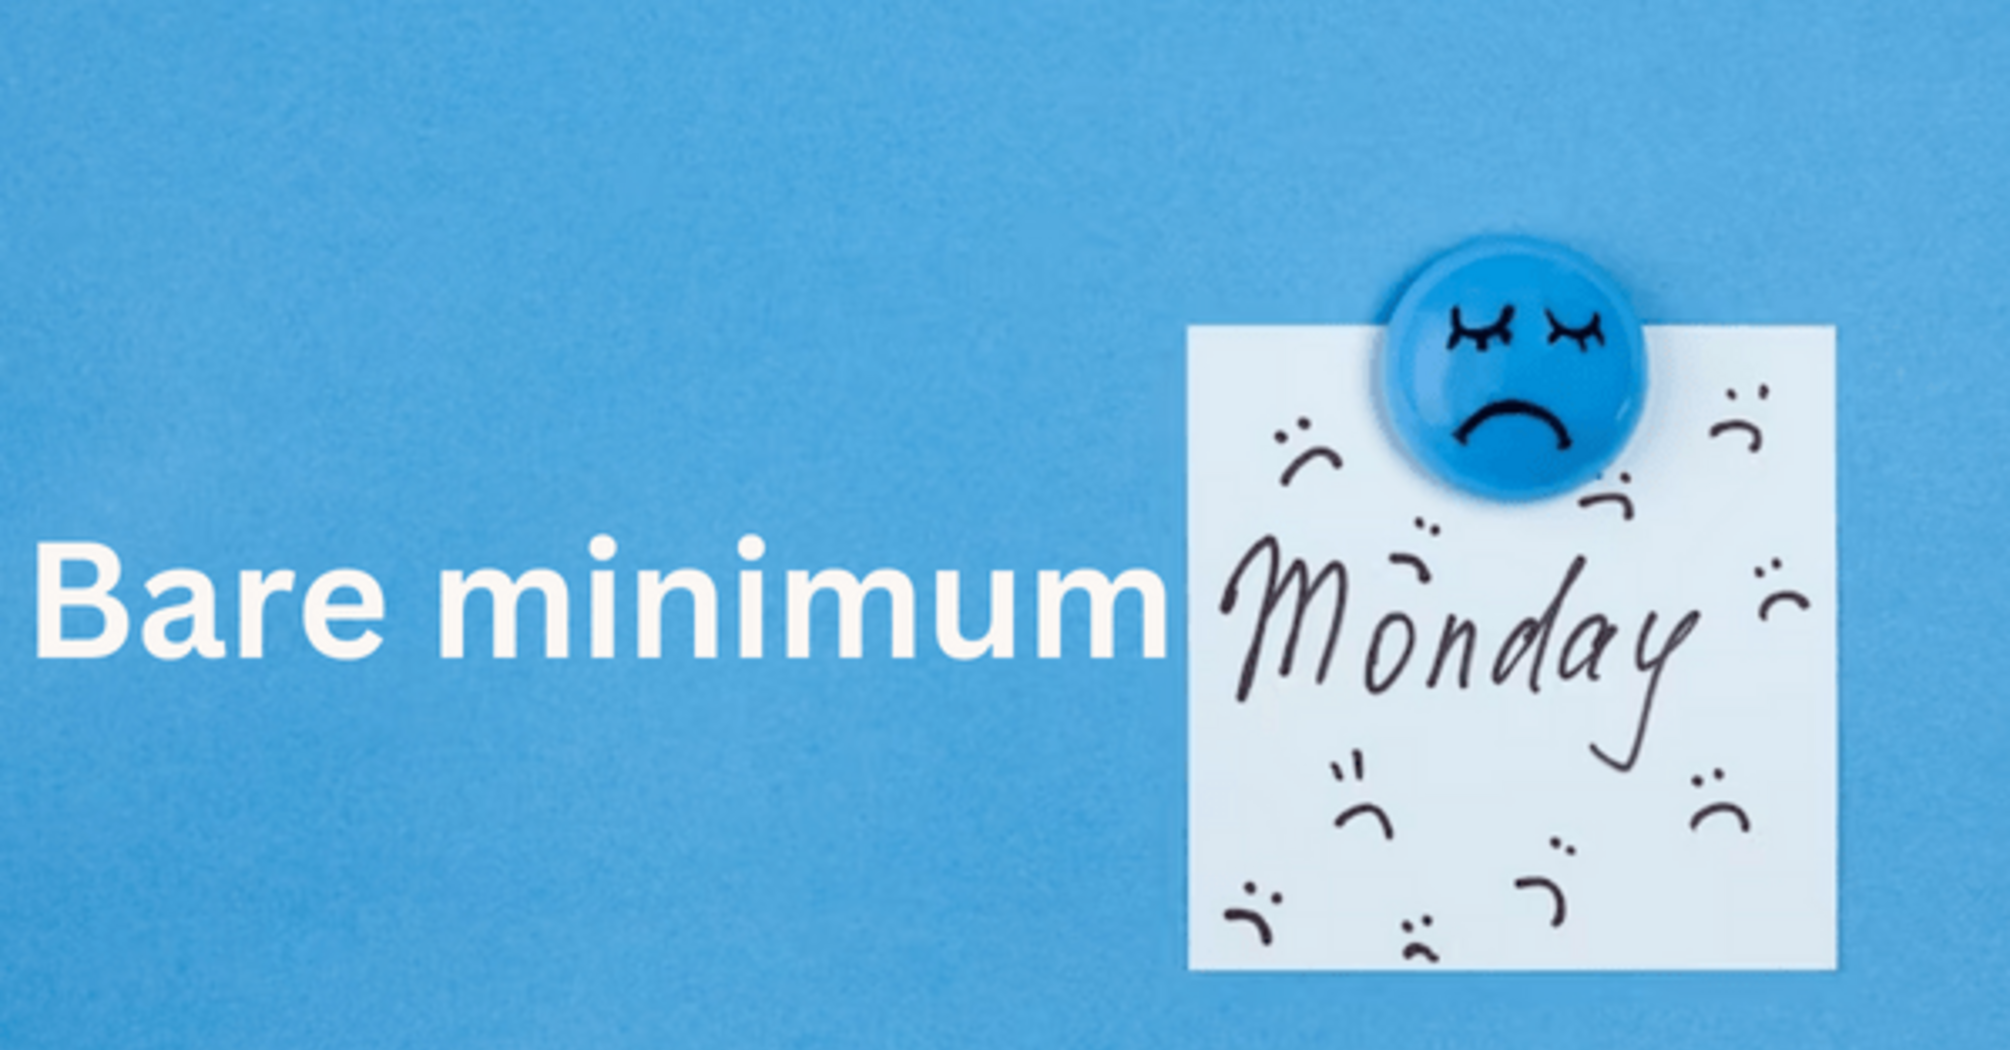 What is "minimum Monday"